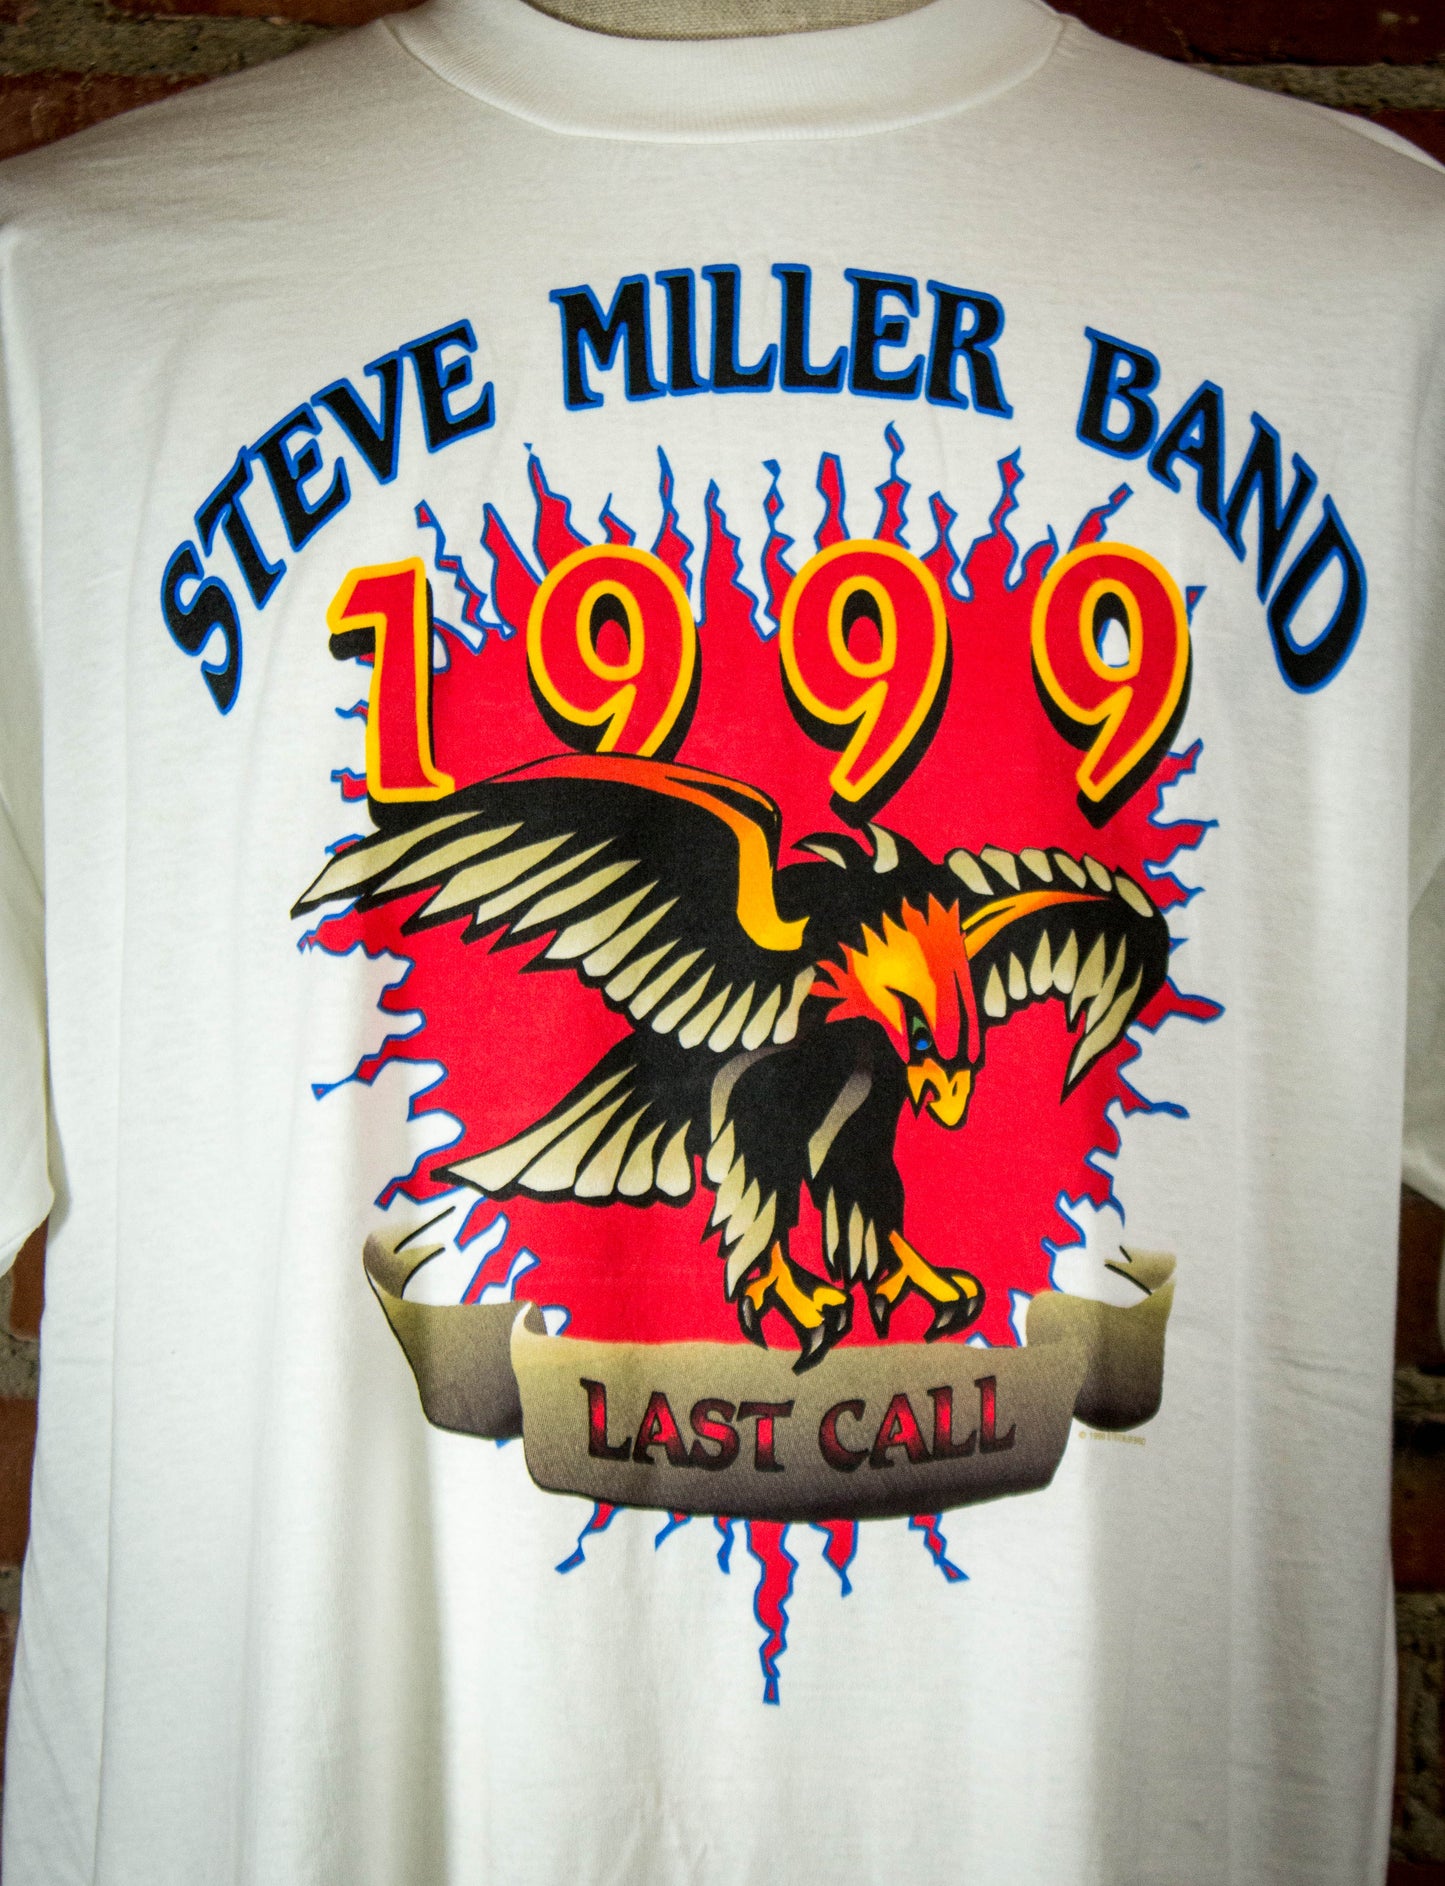 Vintage 1999 Steve Miller Band Last Call Tour White Concert T Shirt Unisex XL